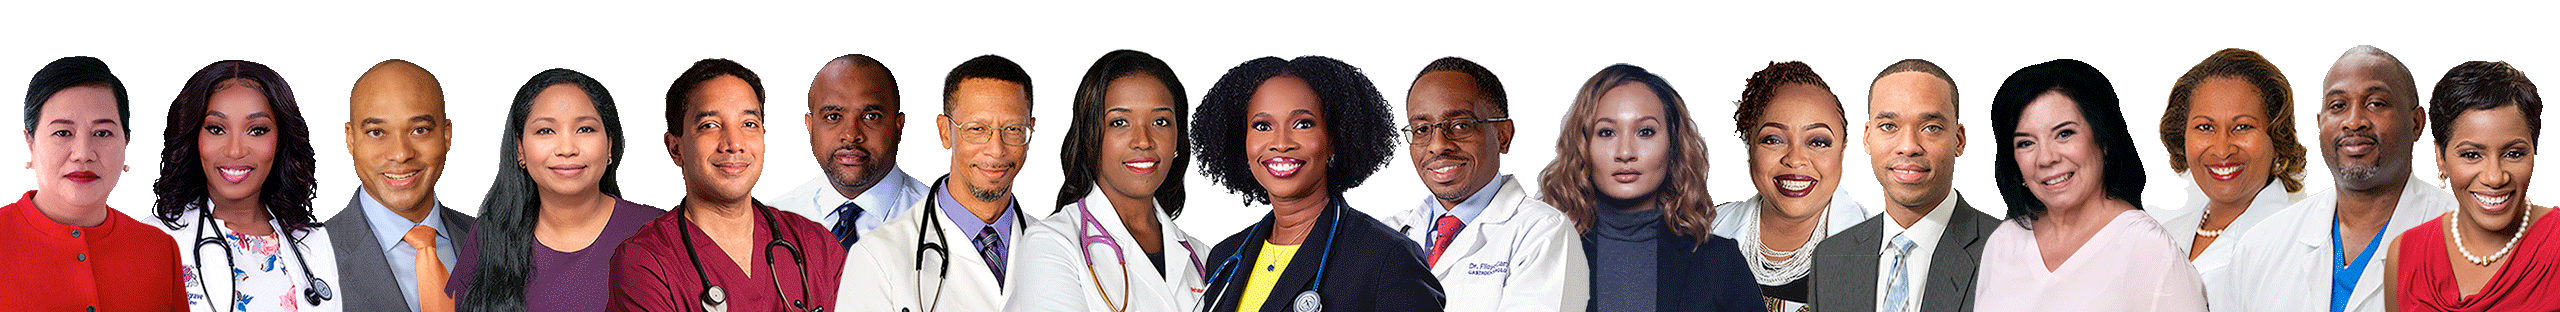 Family Medicine Center doctors; FMC medical team